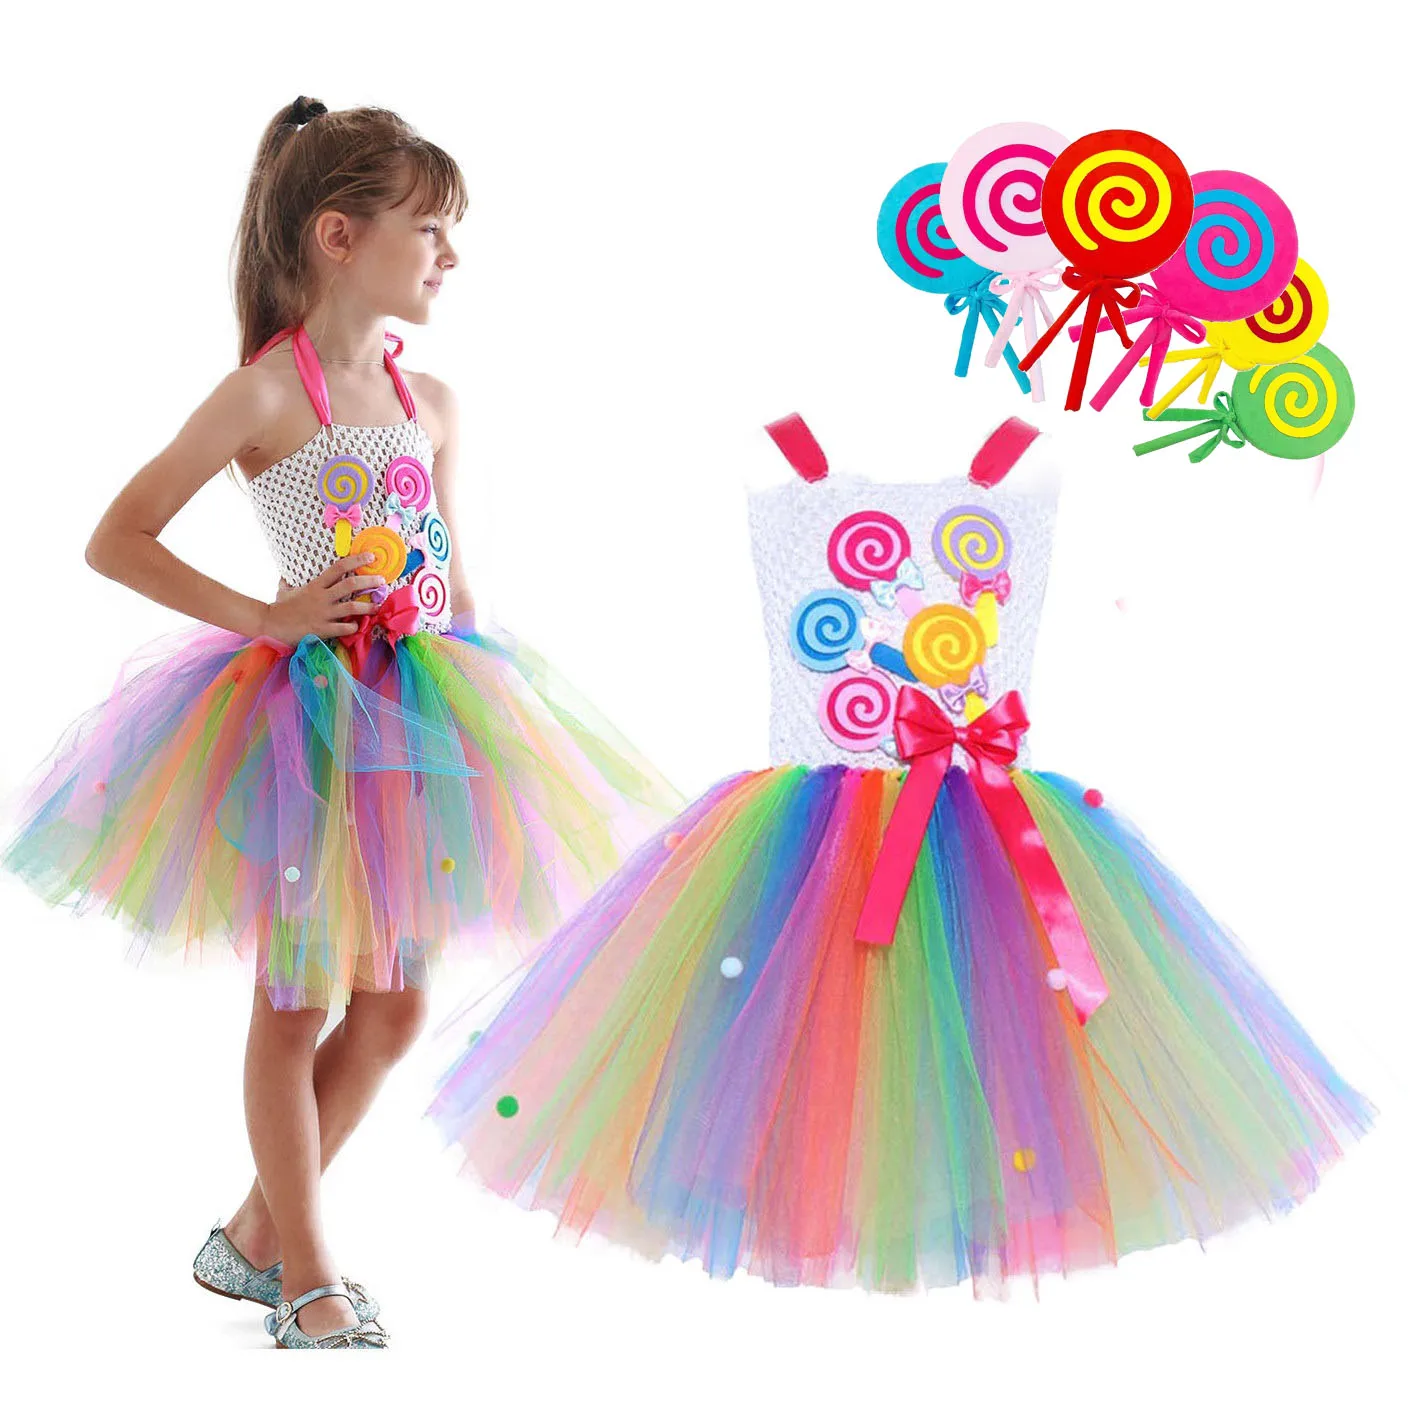 Kid Girls Cartoon Outfit Tutu Dress Rainbow Party Princess Cosplay Costume Set 